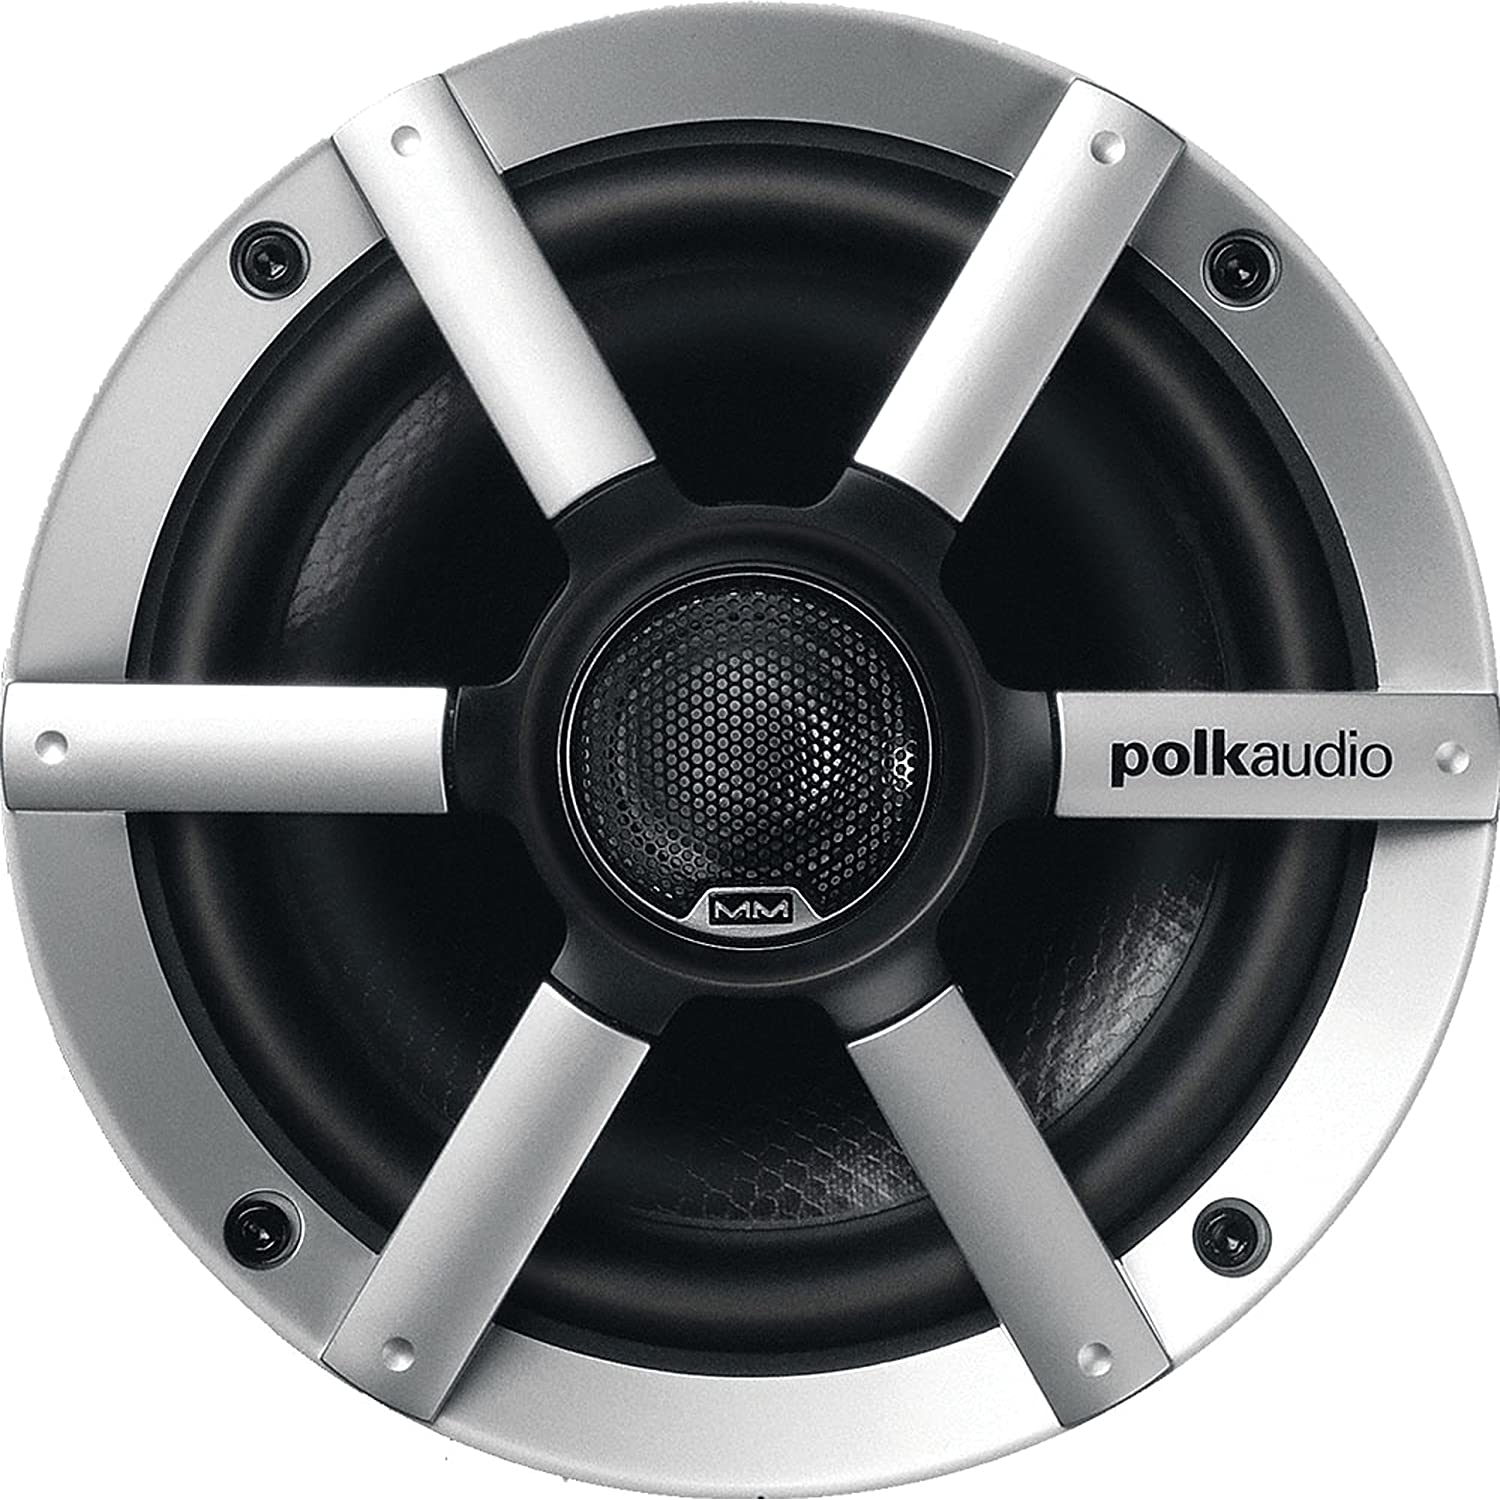 Polk Audio MM651UM Marine Speakers What Are The Best Marine Speakers